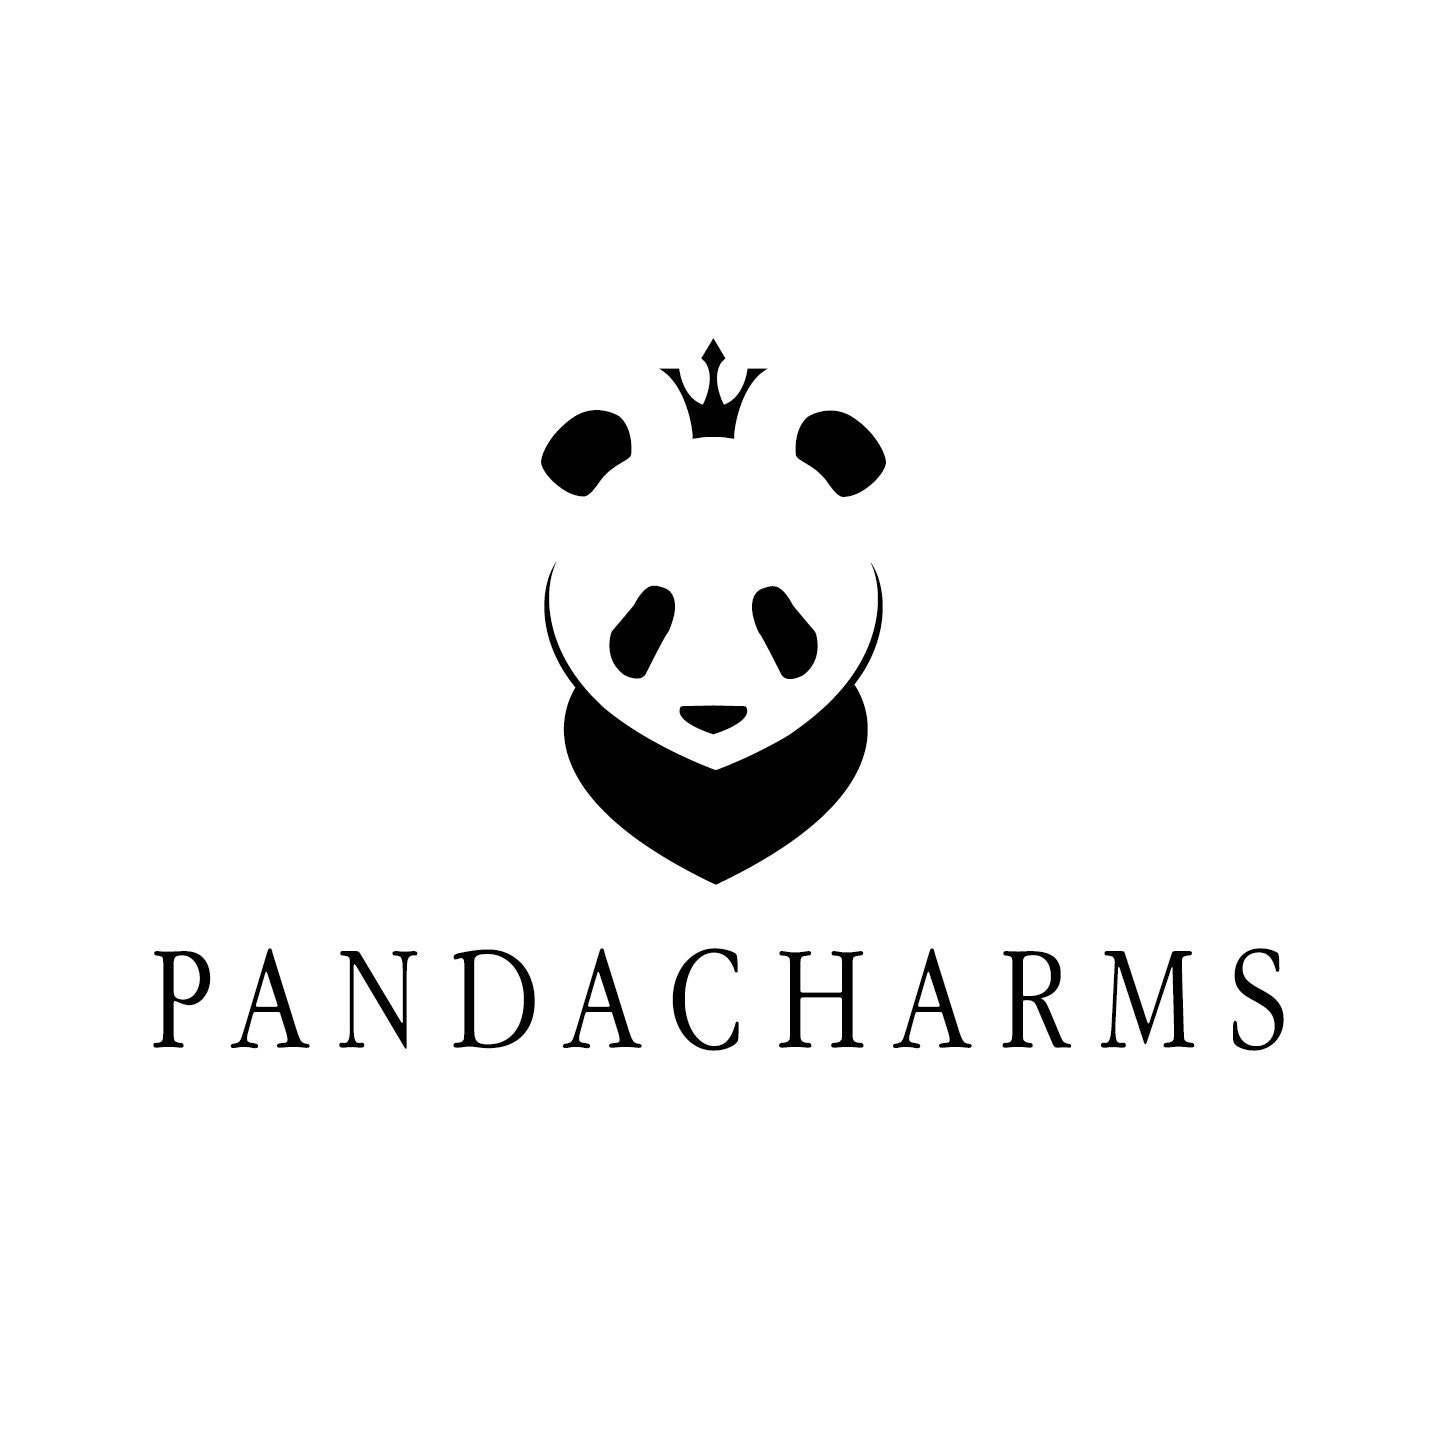 PANDACHARMS Charm Bracelet Extender / Charm Bracelet Extender, 925 Silver,  Length 3 Cm 1.2 Inch or 4 Cm 1.6 Inch, Fits Pandora 